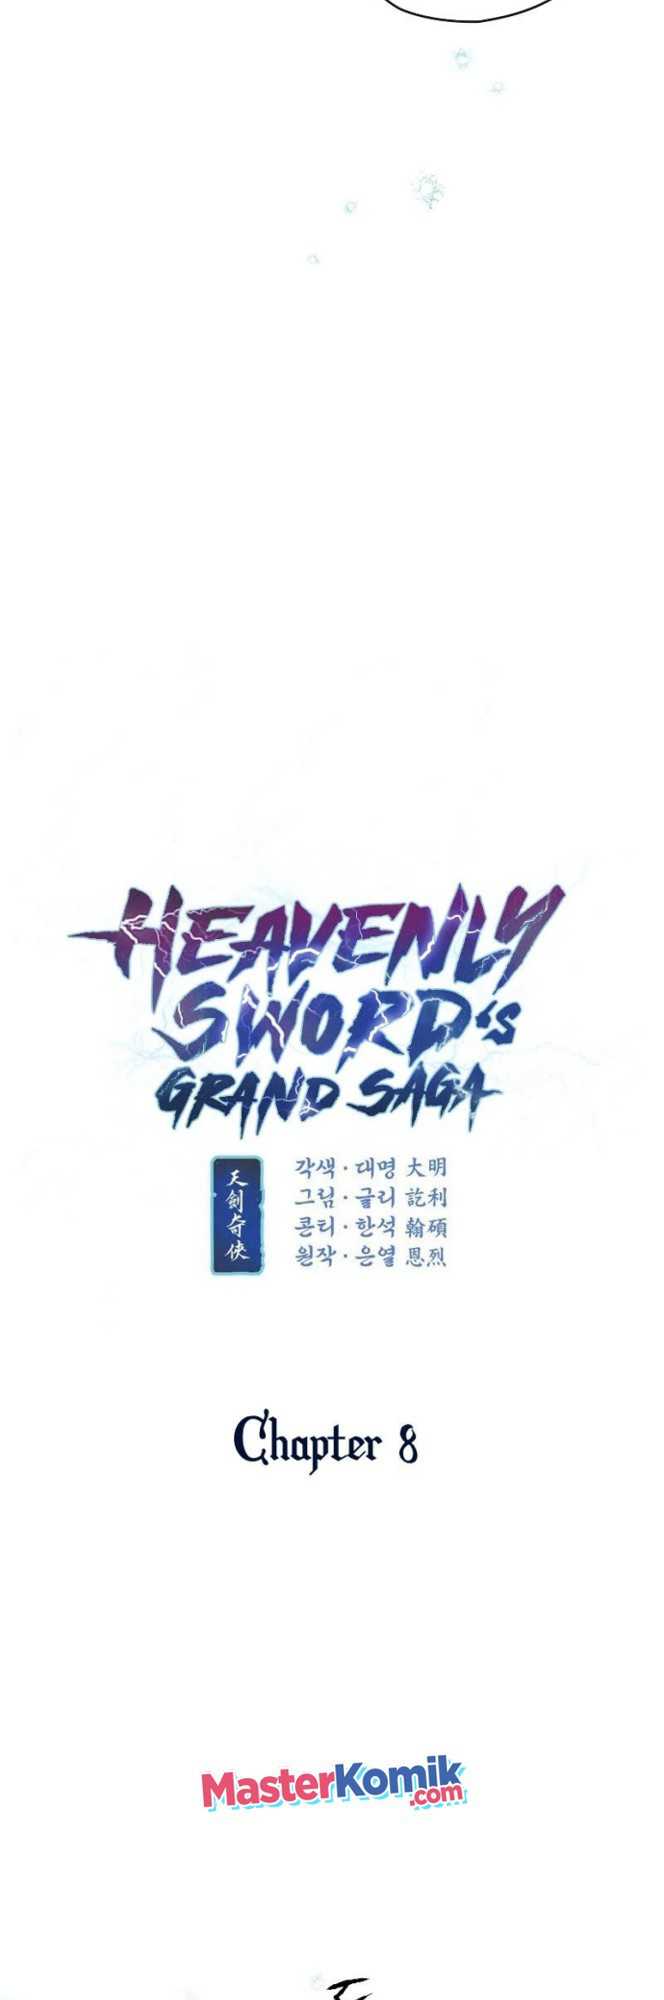 Heavenly Sword’s Grand Saga Chapter 08